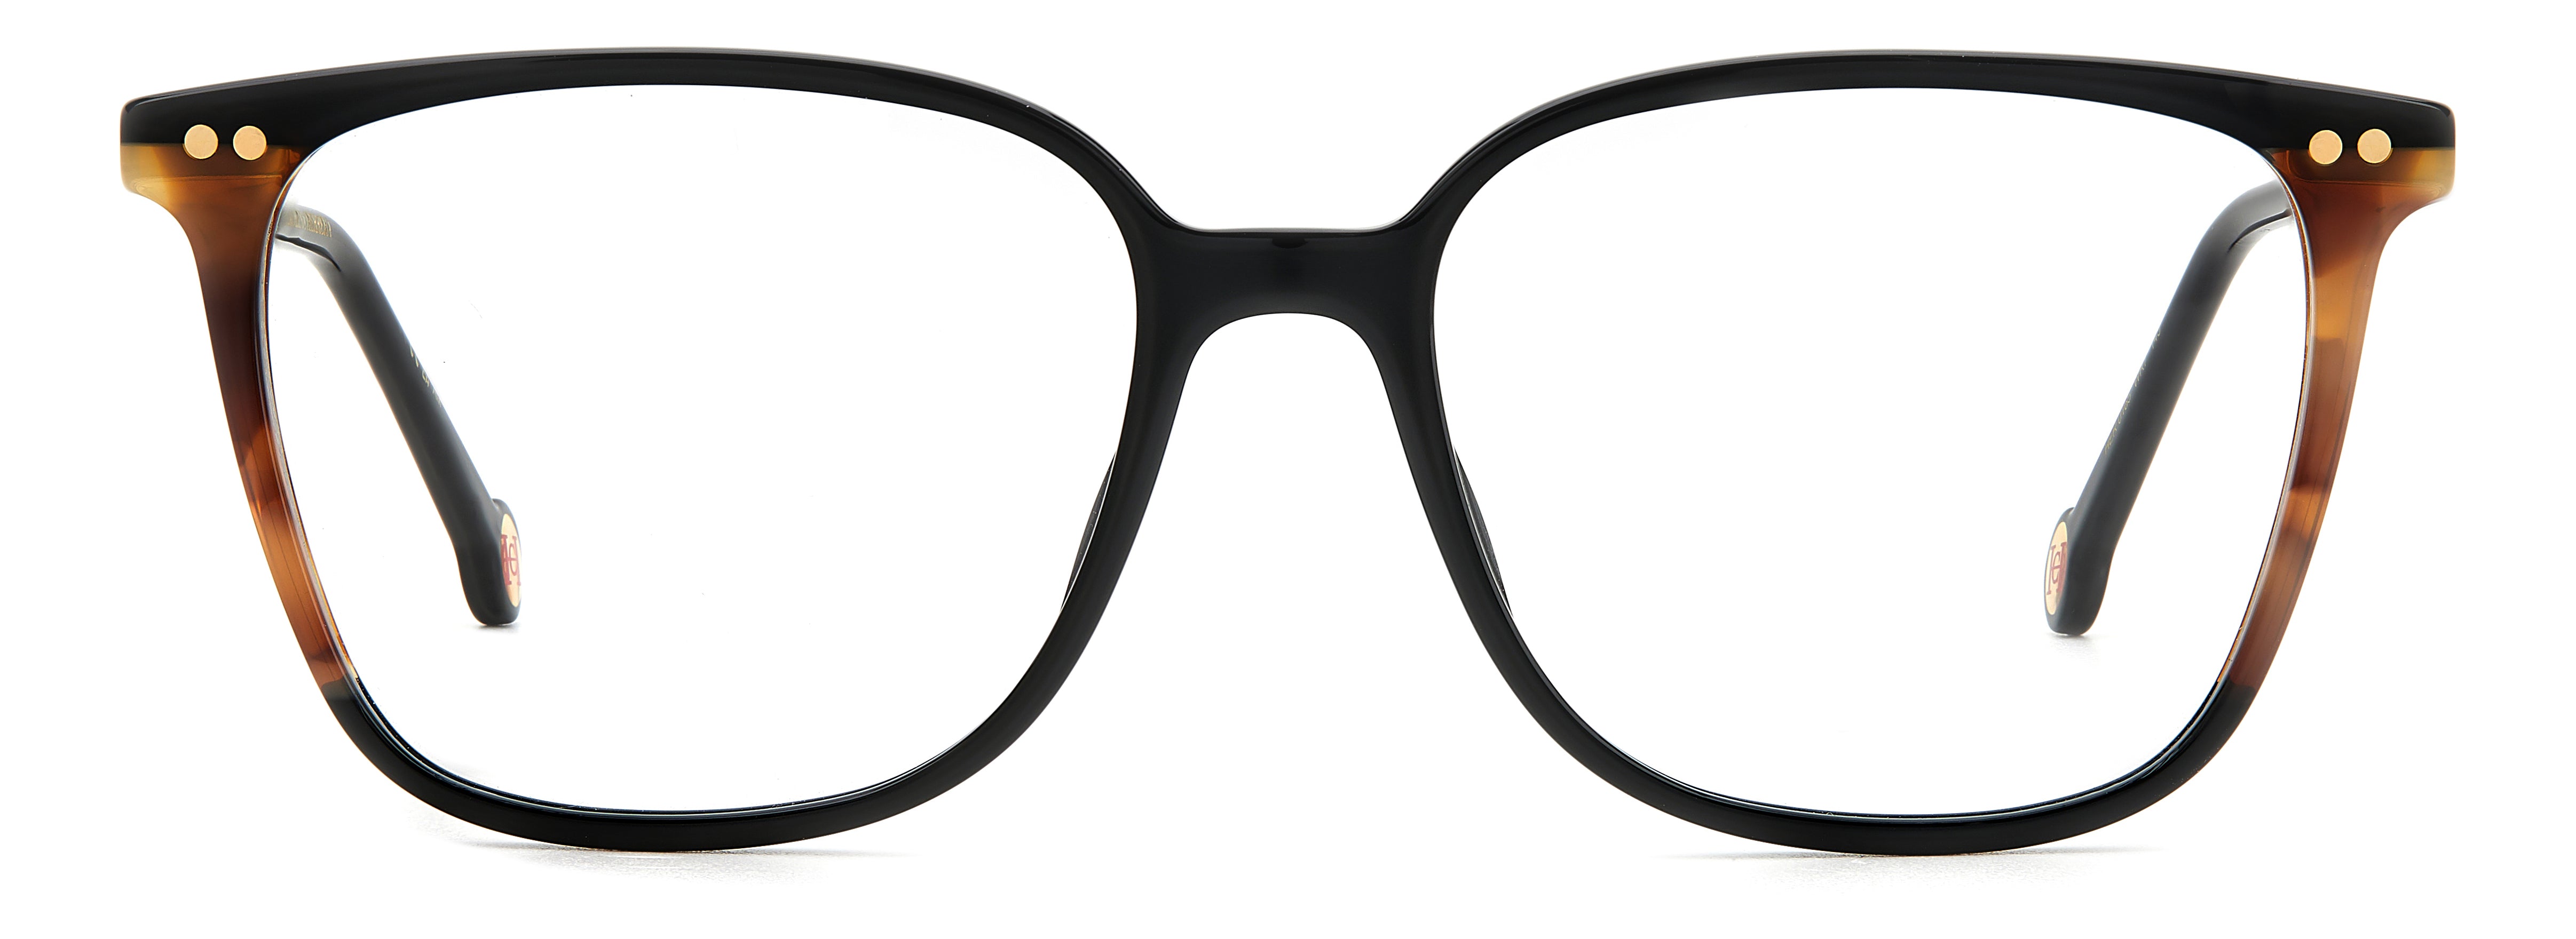 Sunglasses,specsmart, spec smart, glasses, eye glasses glasses frames, where to get glasses in lagos, eye treatment, wellness health care group, caeolina herrera HER 0165